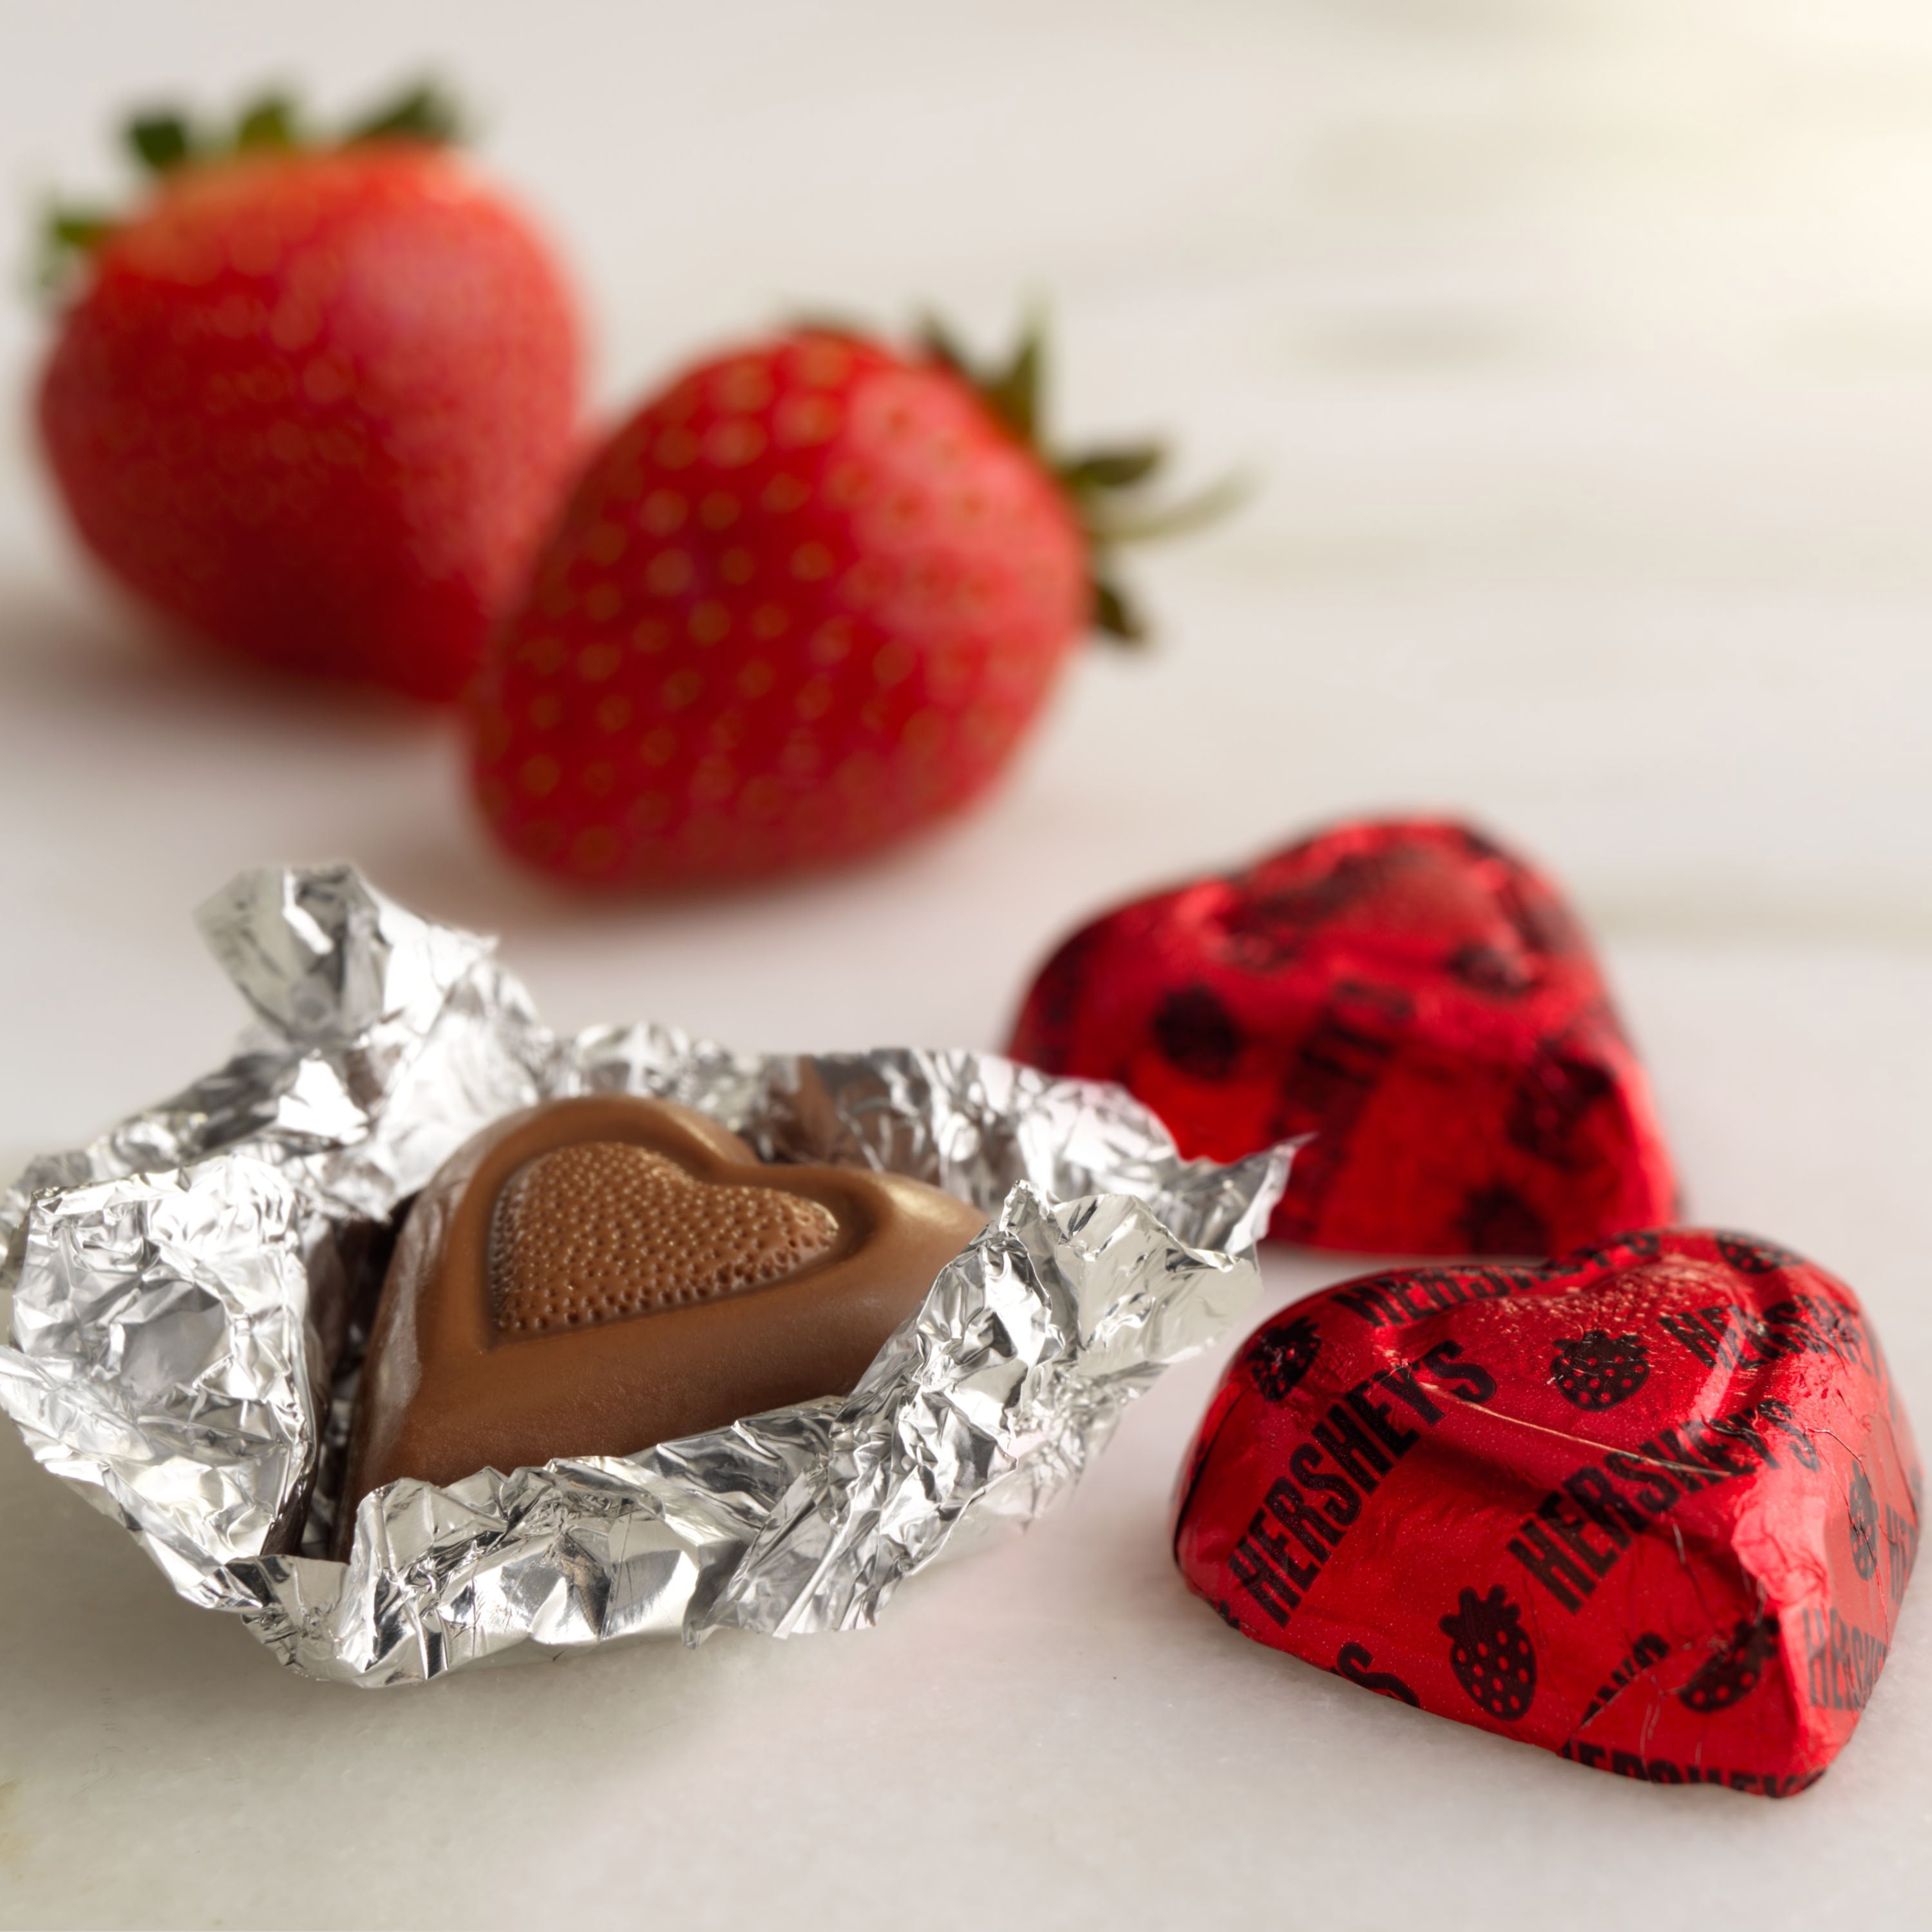 Strawberry love  Créme fraise - YummyCandy